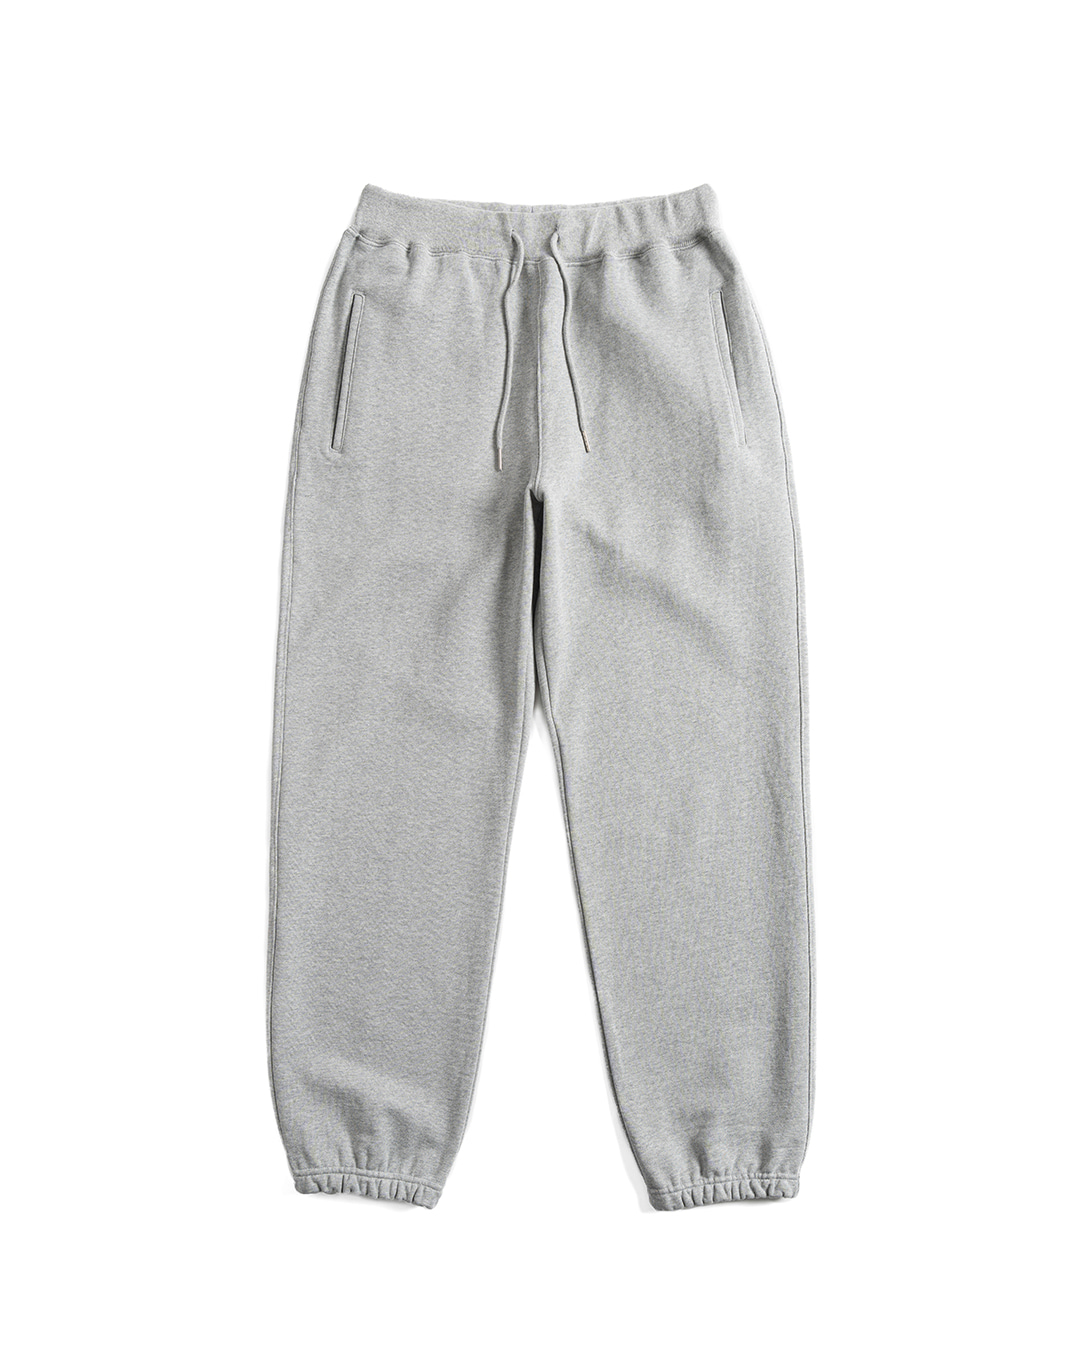 TWB SWEAT PANTS (grey)